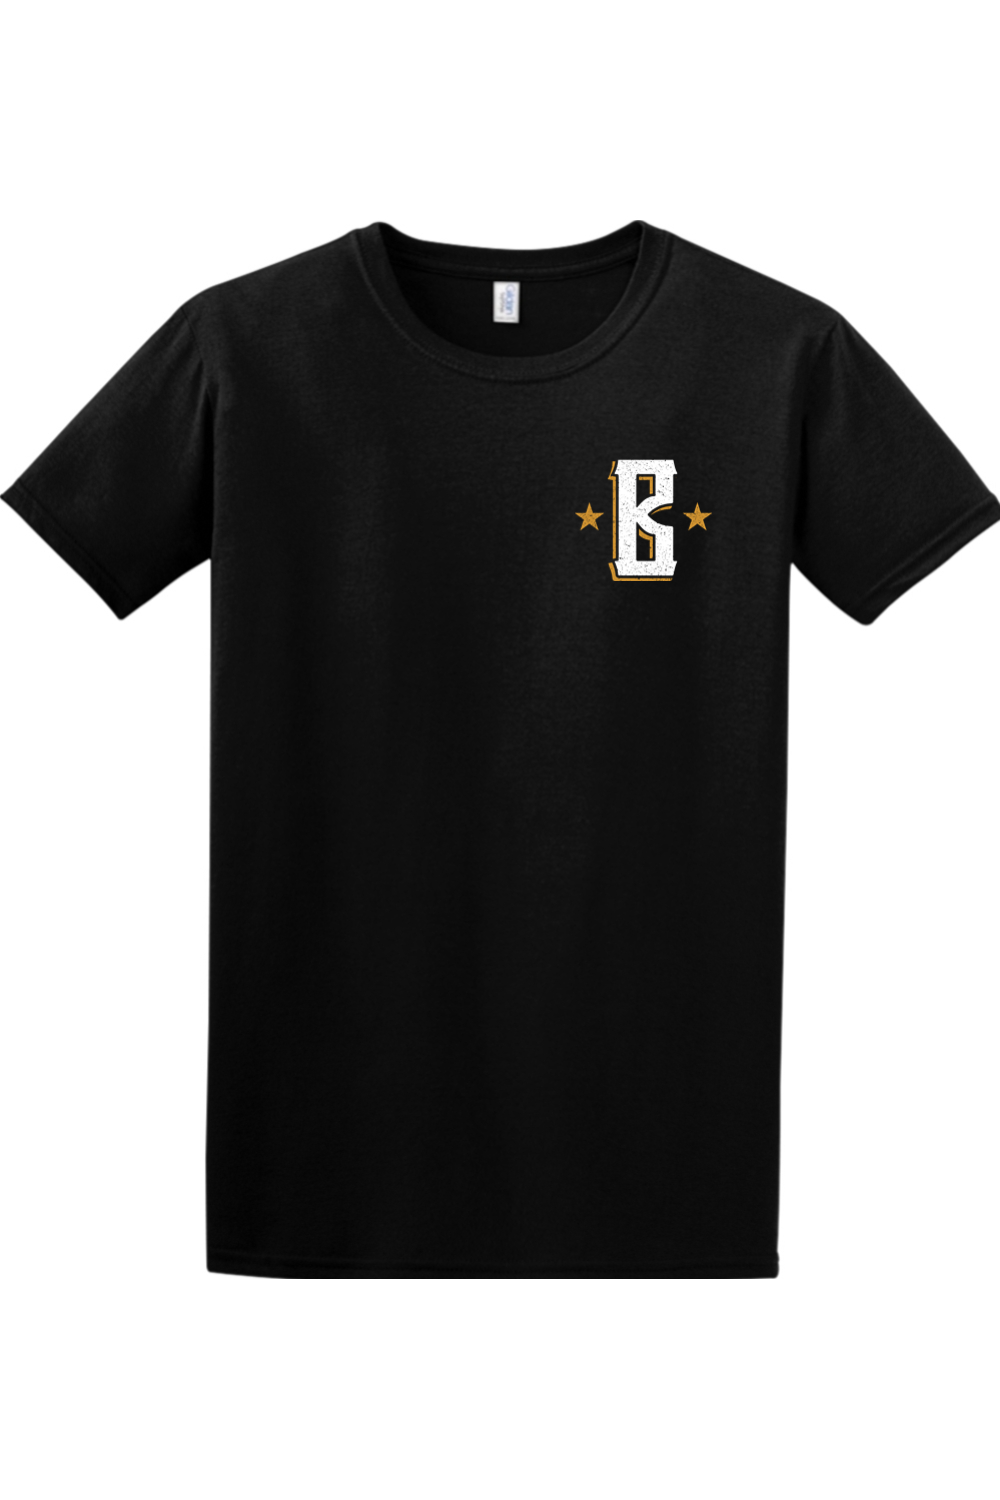 Barrett's Alehouse Bridgewater T-Shirt